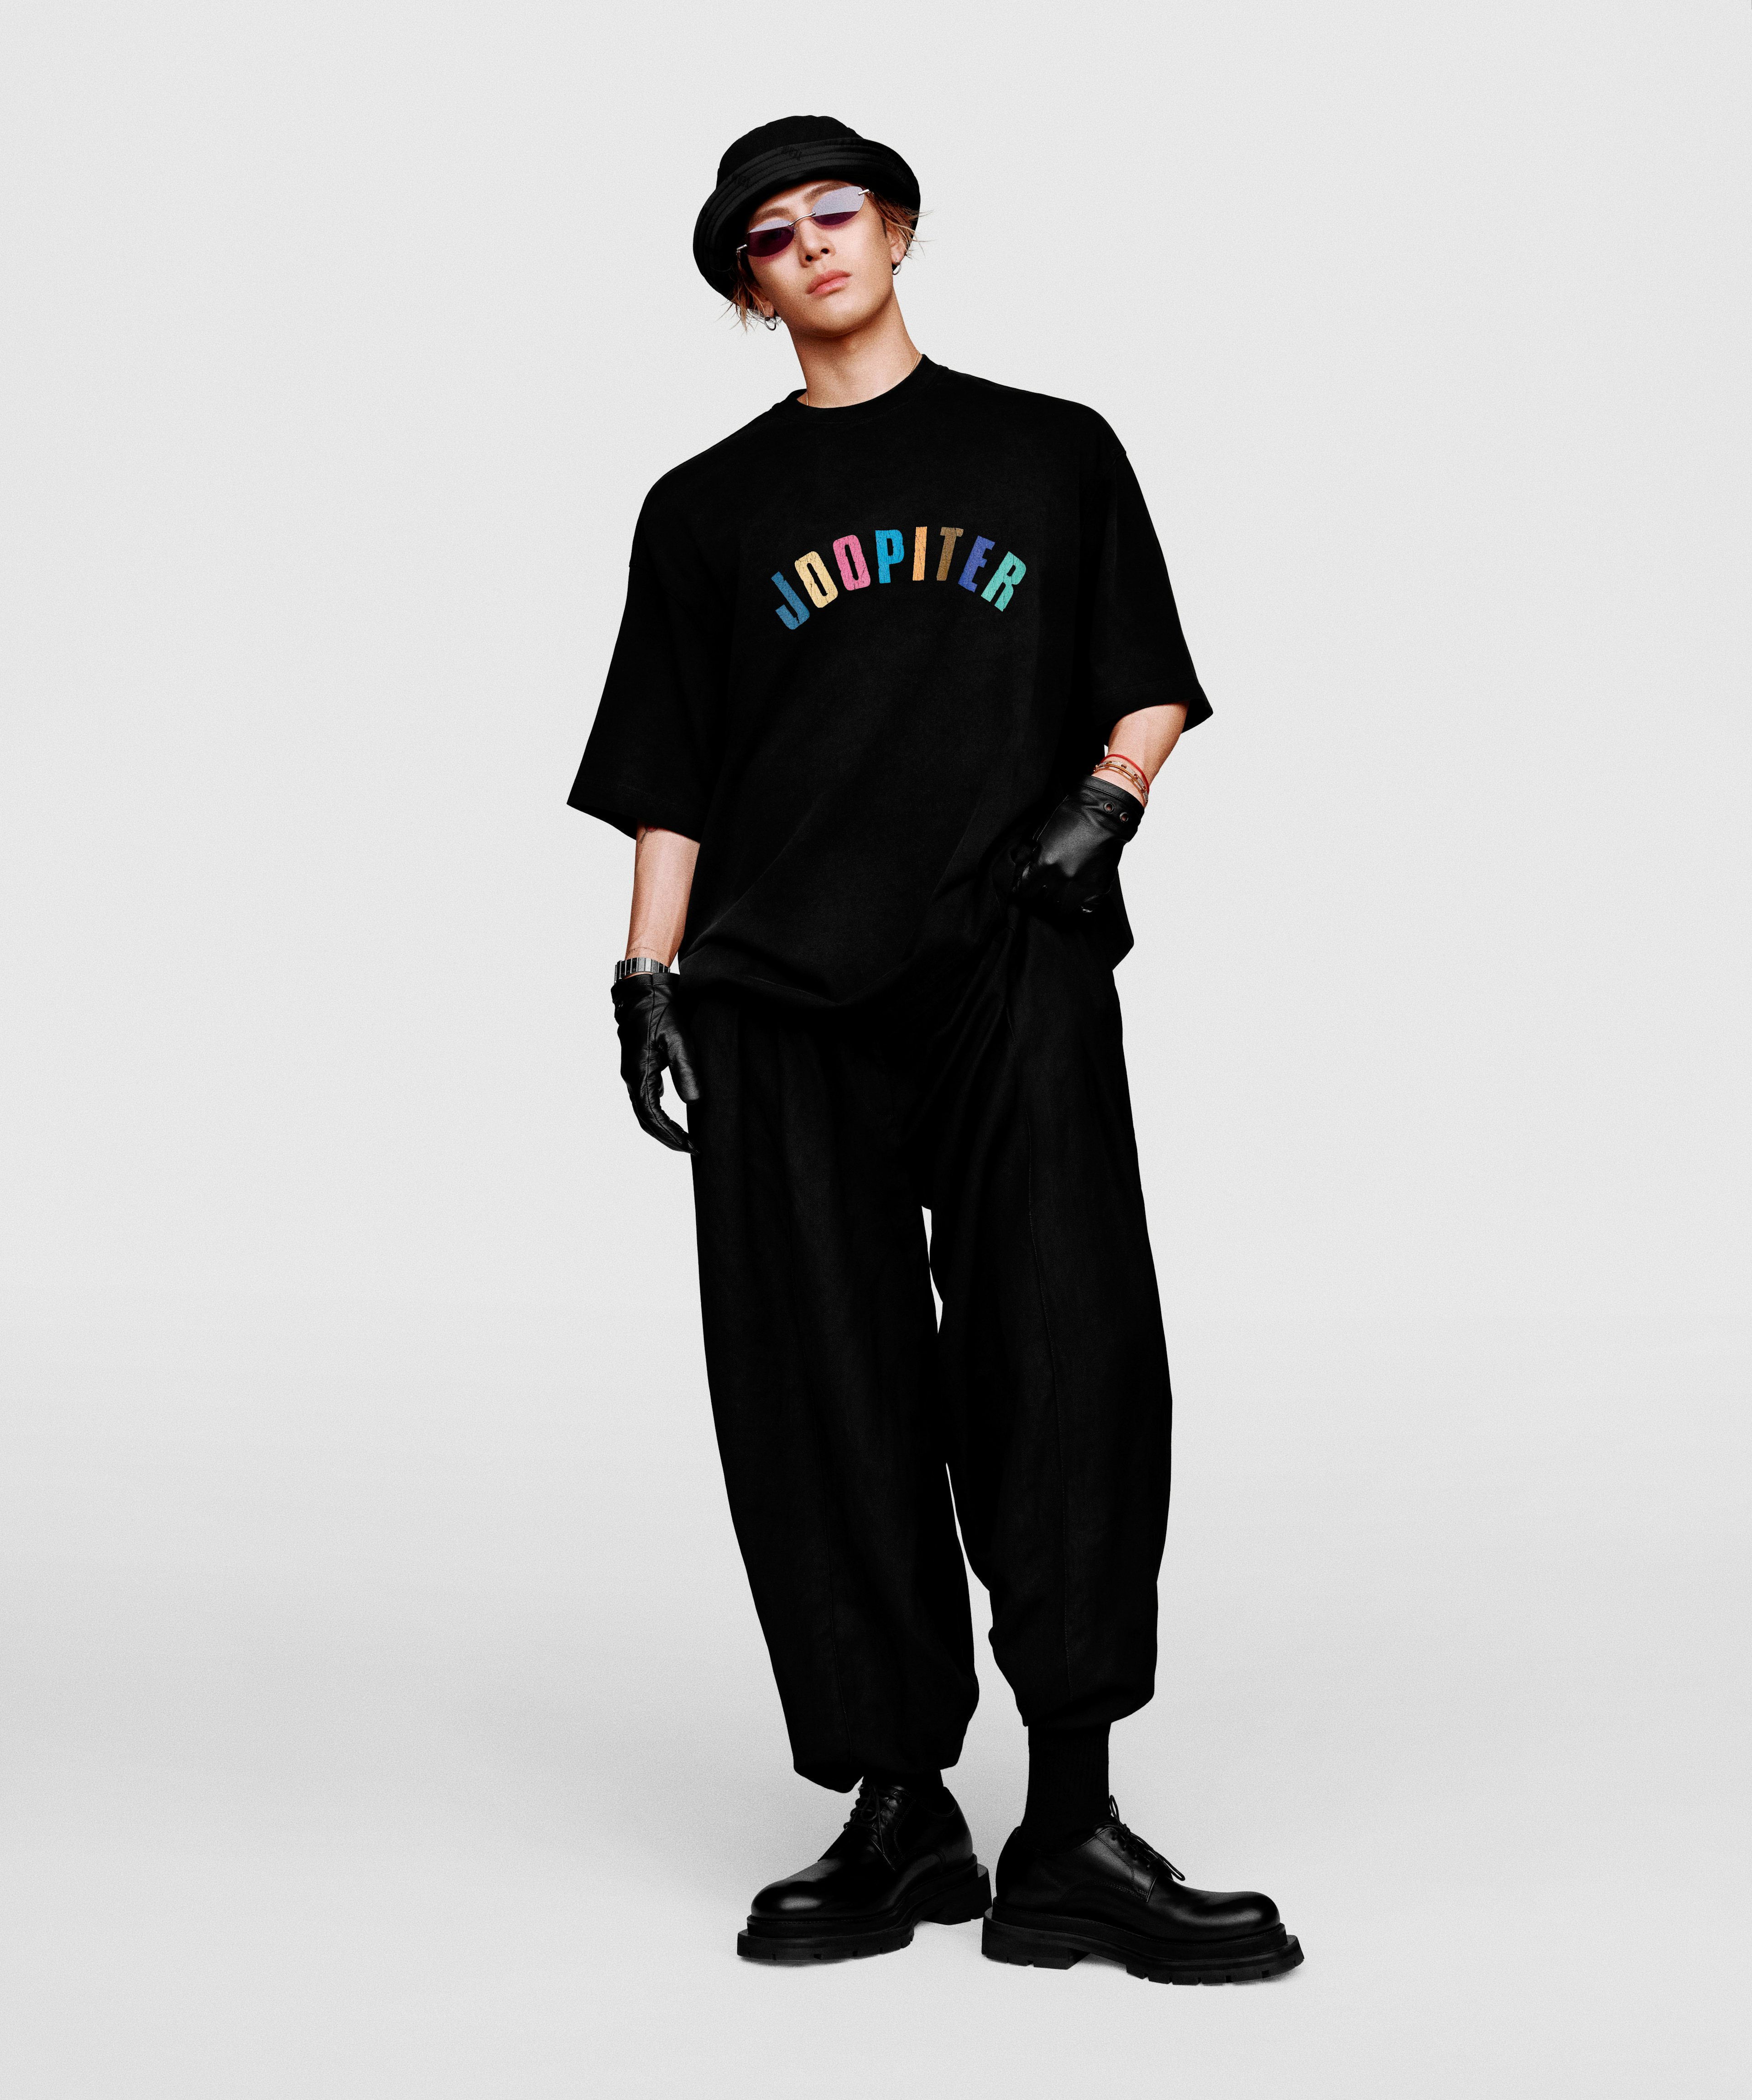 Jackson Wang models Team Wang x Joopiter merchandise. Image: Joopiter